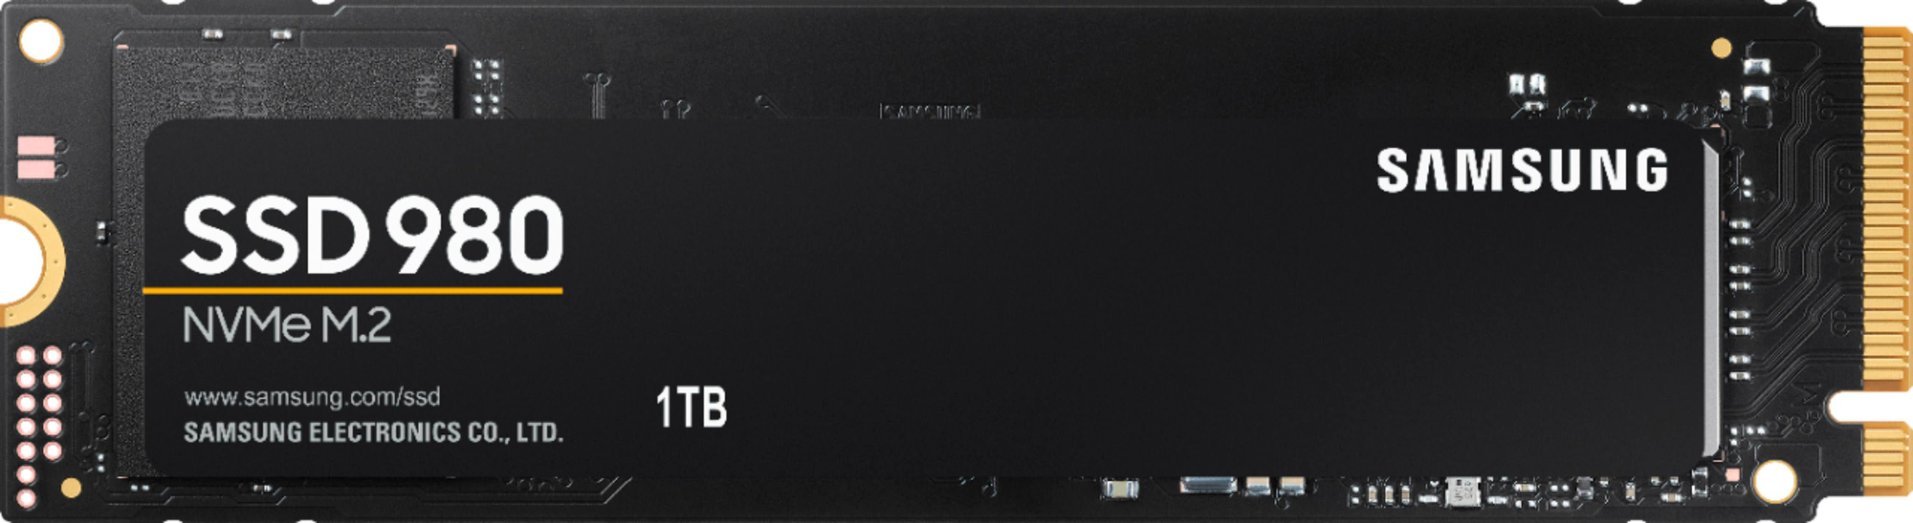 Samsung - 980 1TB Internal Gaming SSD PCIe Gen 3 x4 NVMe $44.99